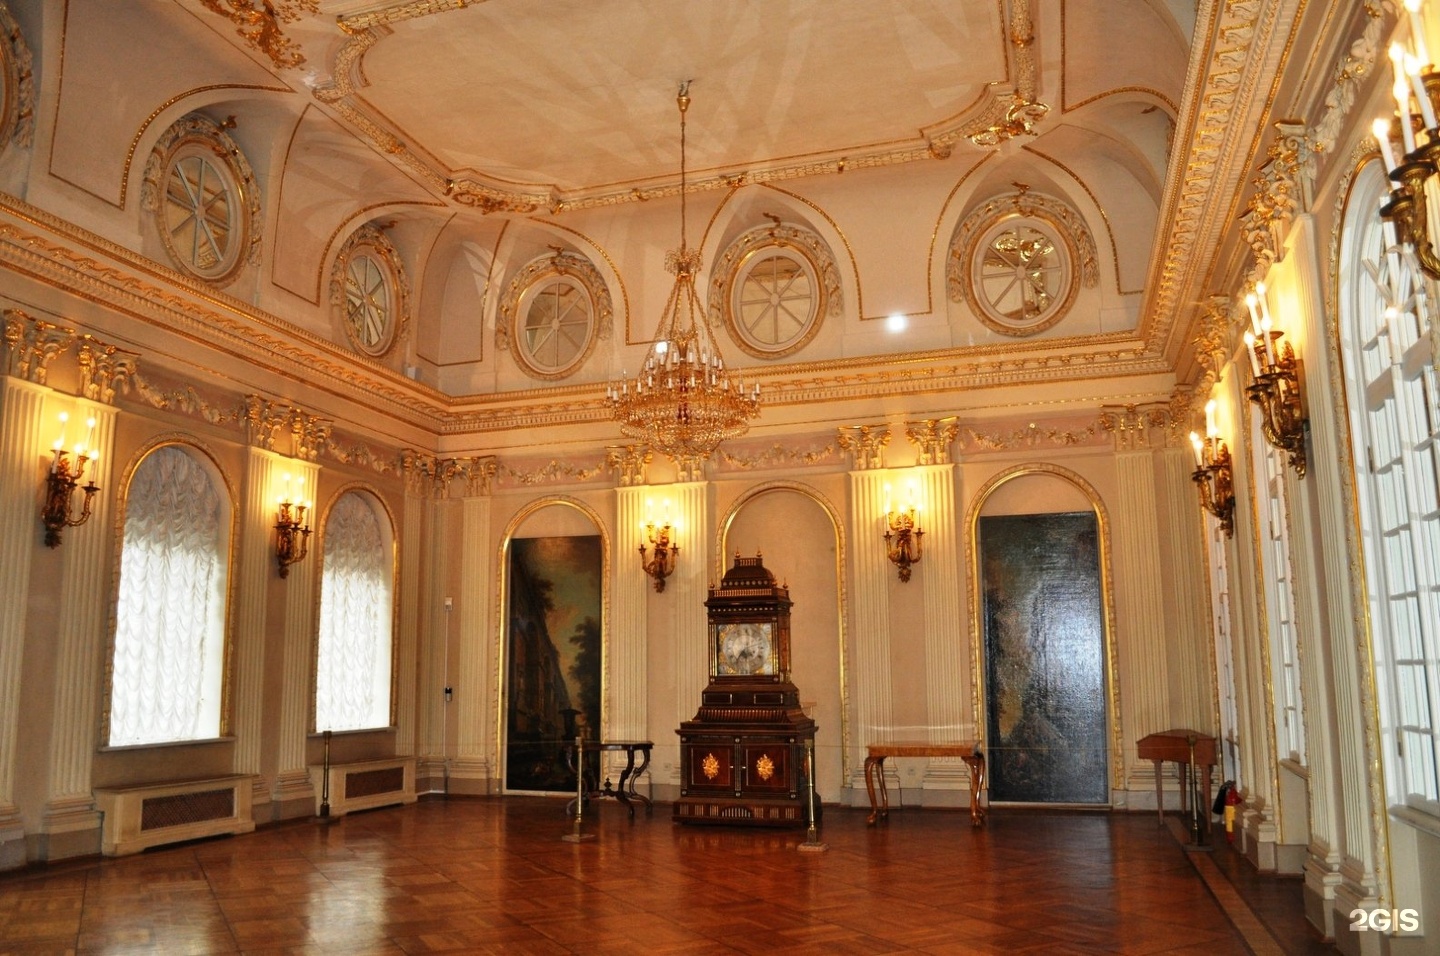 Меншиковский дворец в петербурге